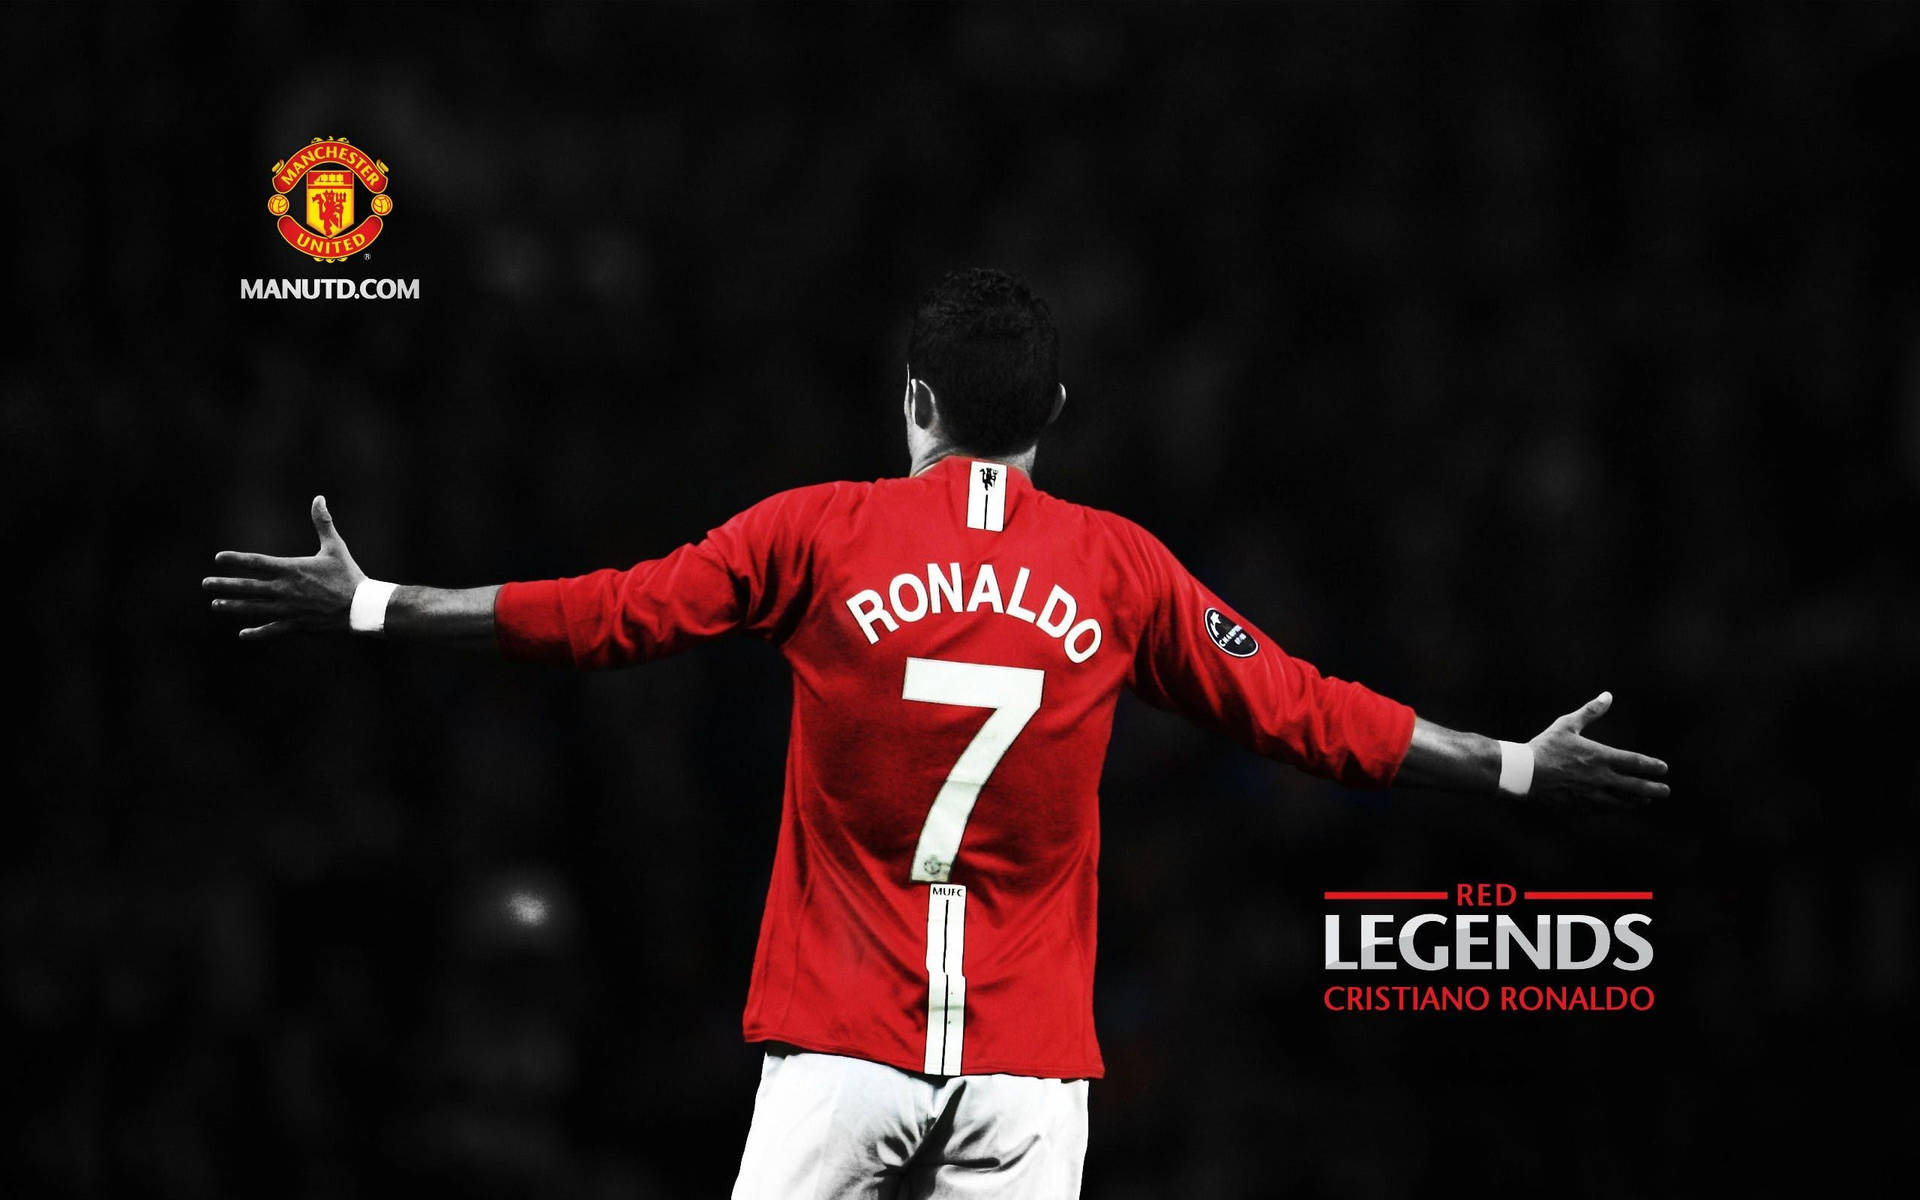 Cristiano Ronaldo Portugal Red Legends Background